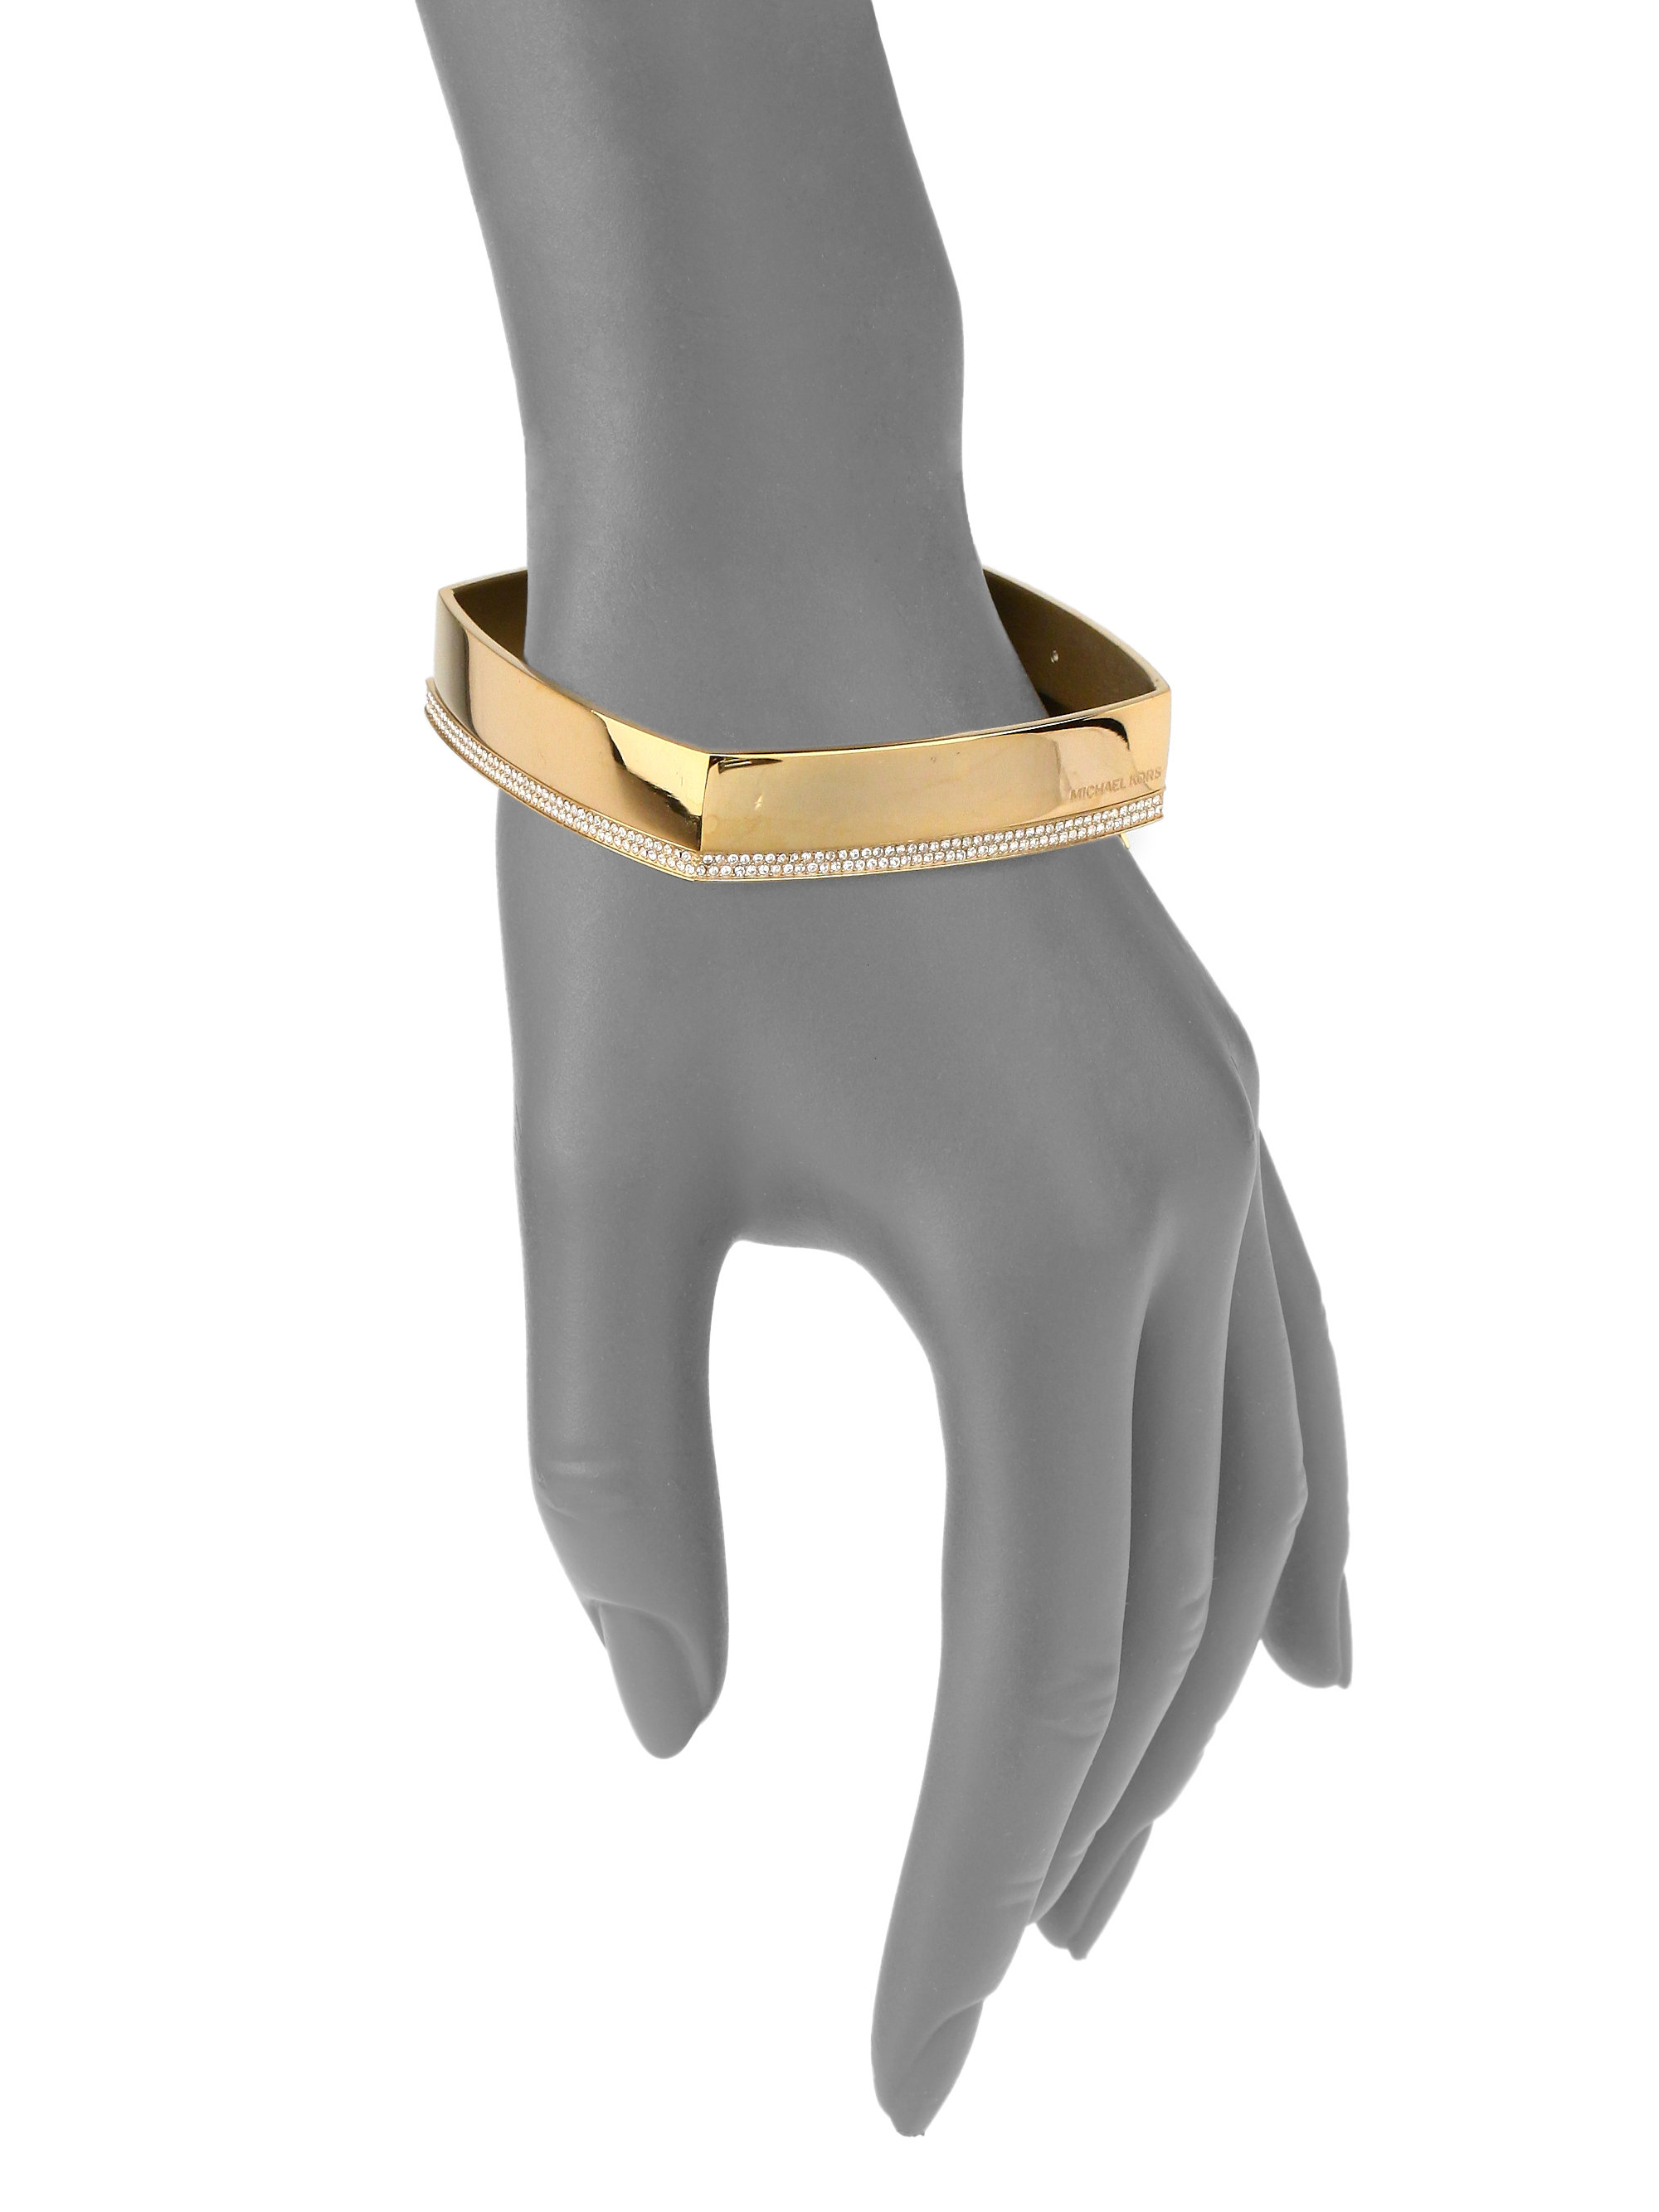 Michael Kors Heritage Logo Pavé Chained Square Bangle Bracelet Set in Gold  (Metallic) | Lyst